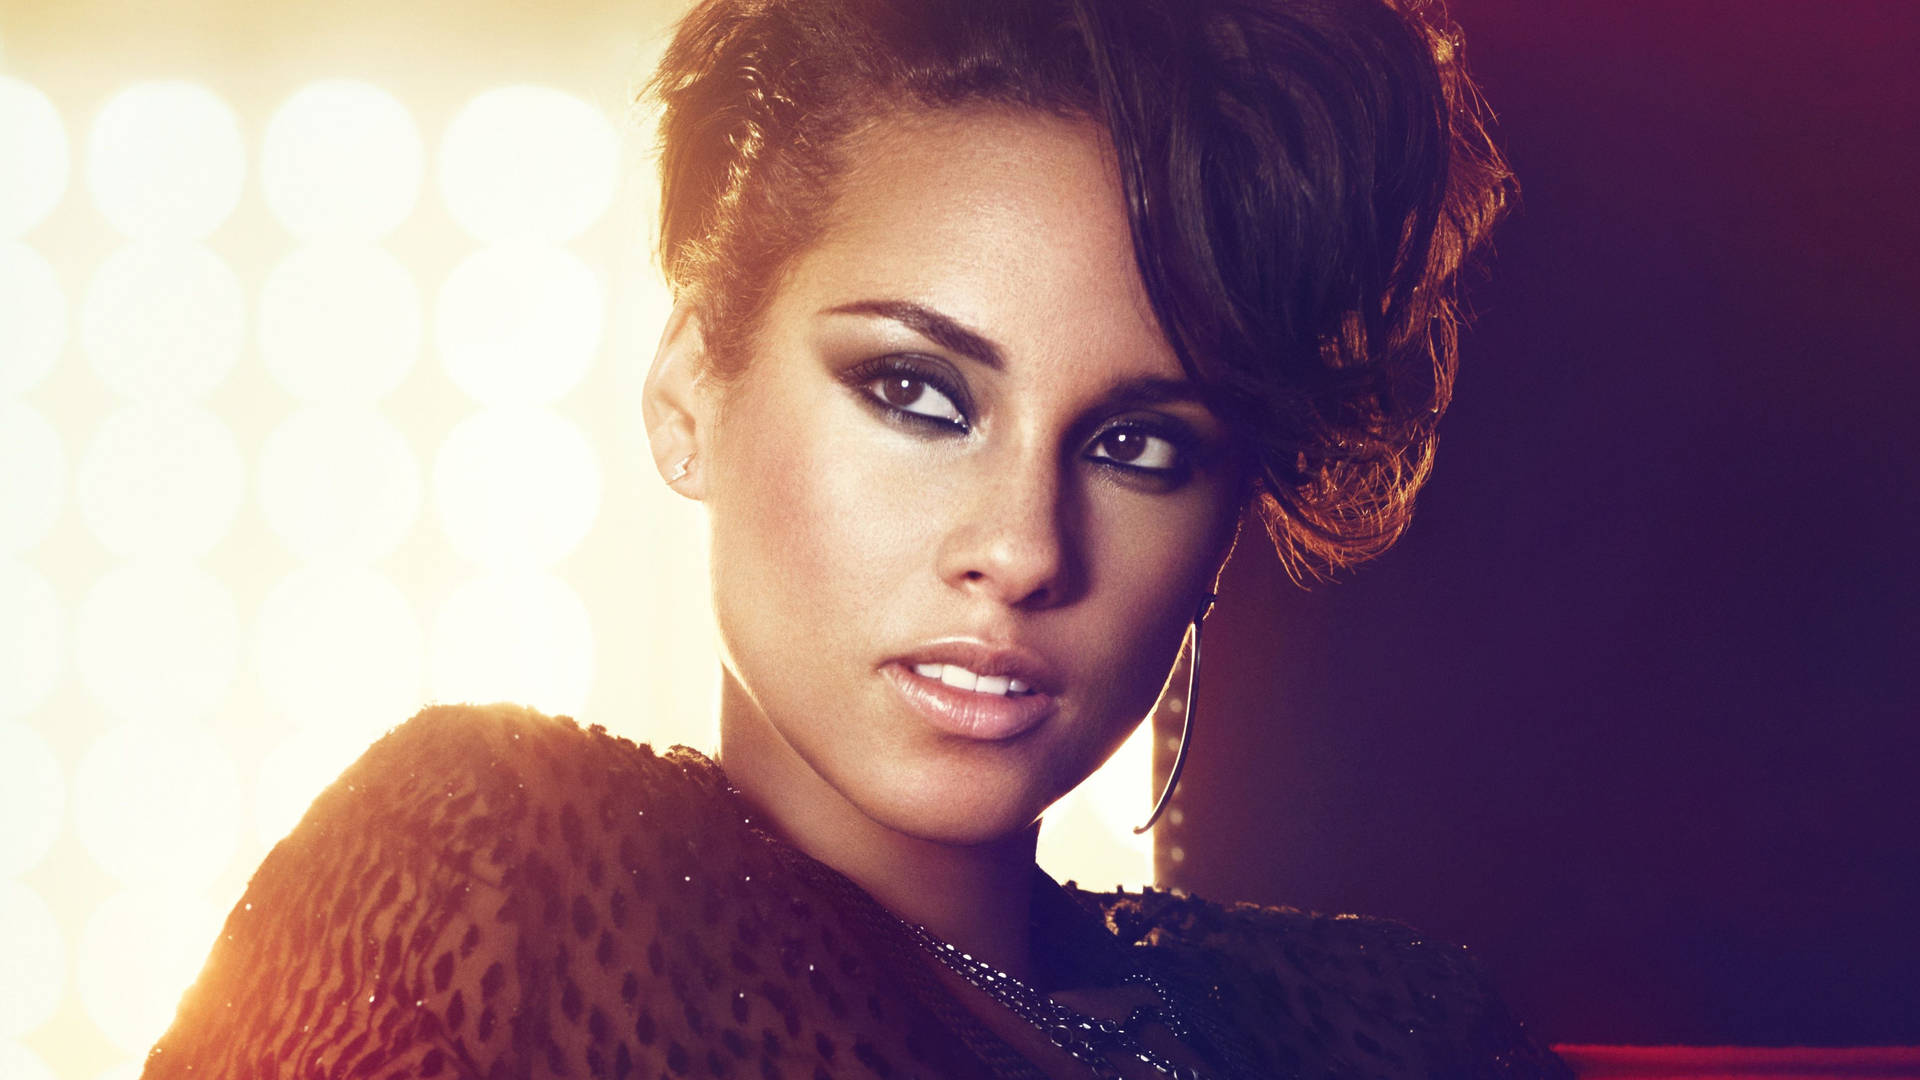 Alicia Keys With Smoky Makeup Wallpaper